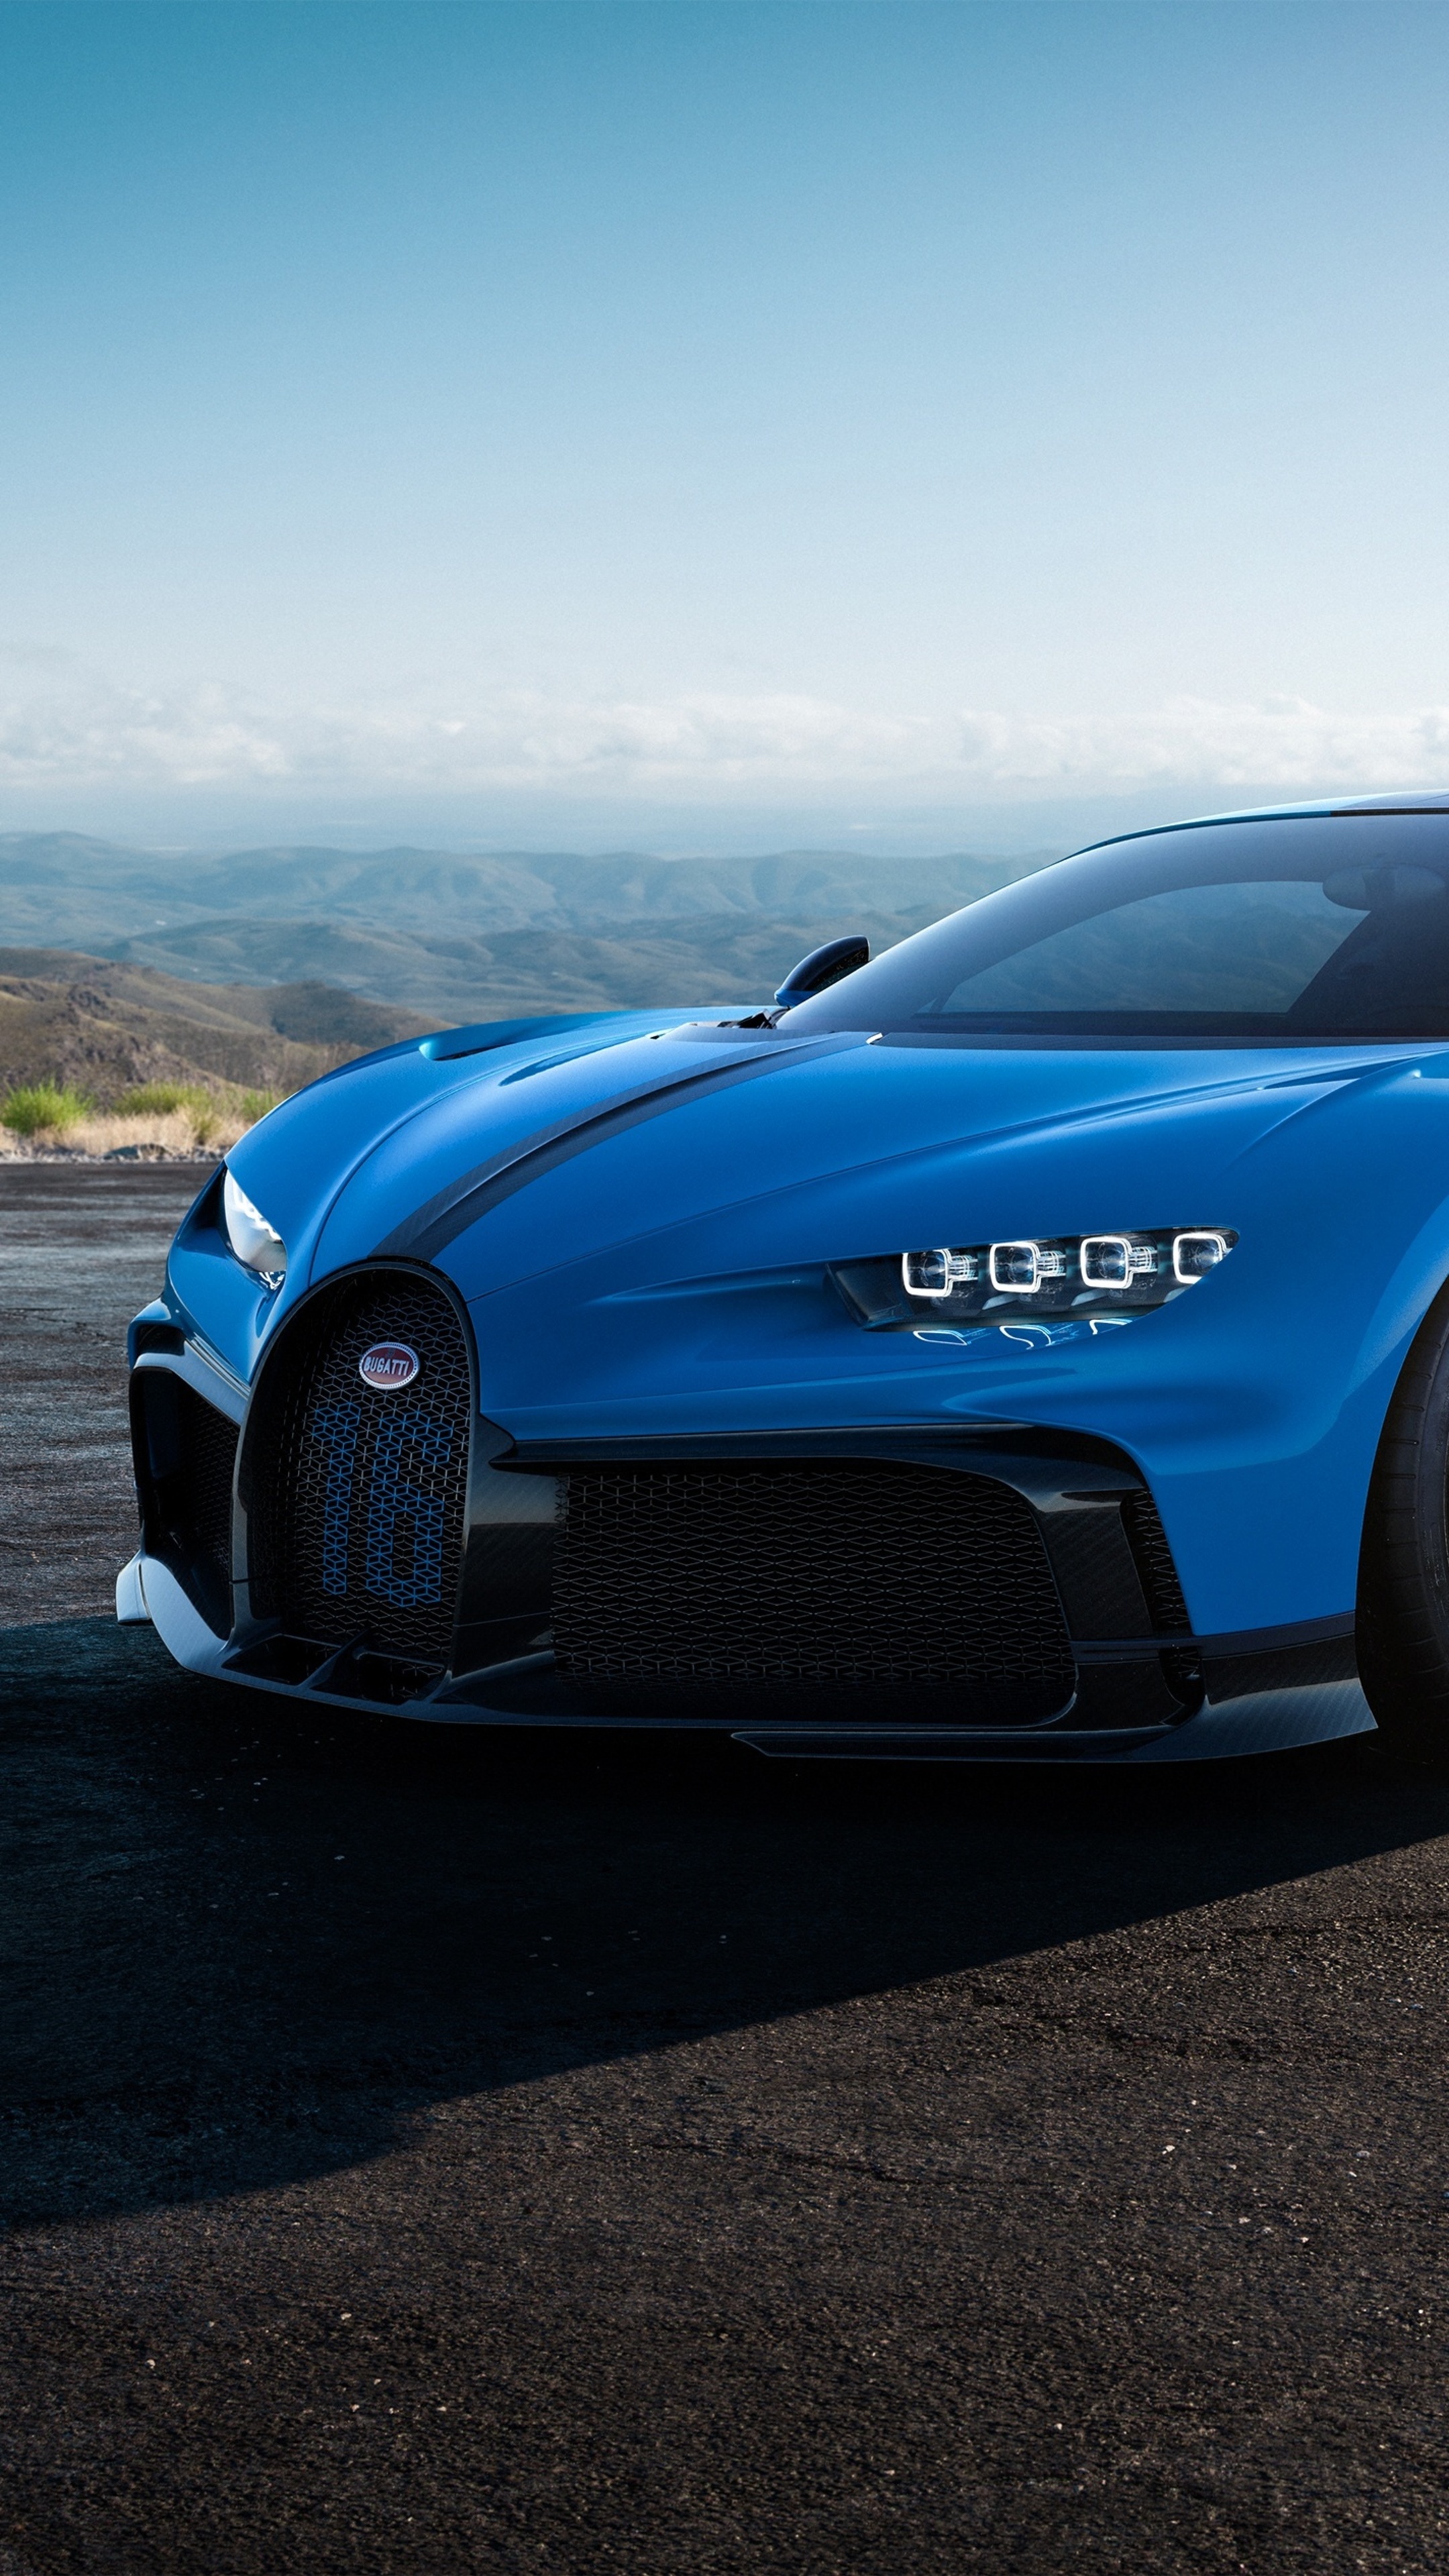 Sports Car: Bugatti Chiron, Features advanced suspension systems. 2160x3840 4K Wallpaper.